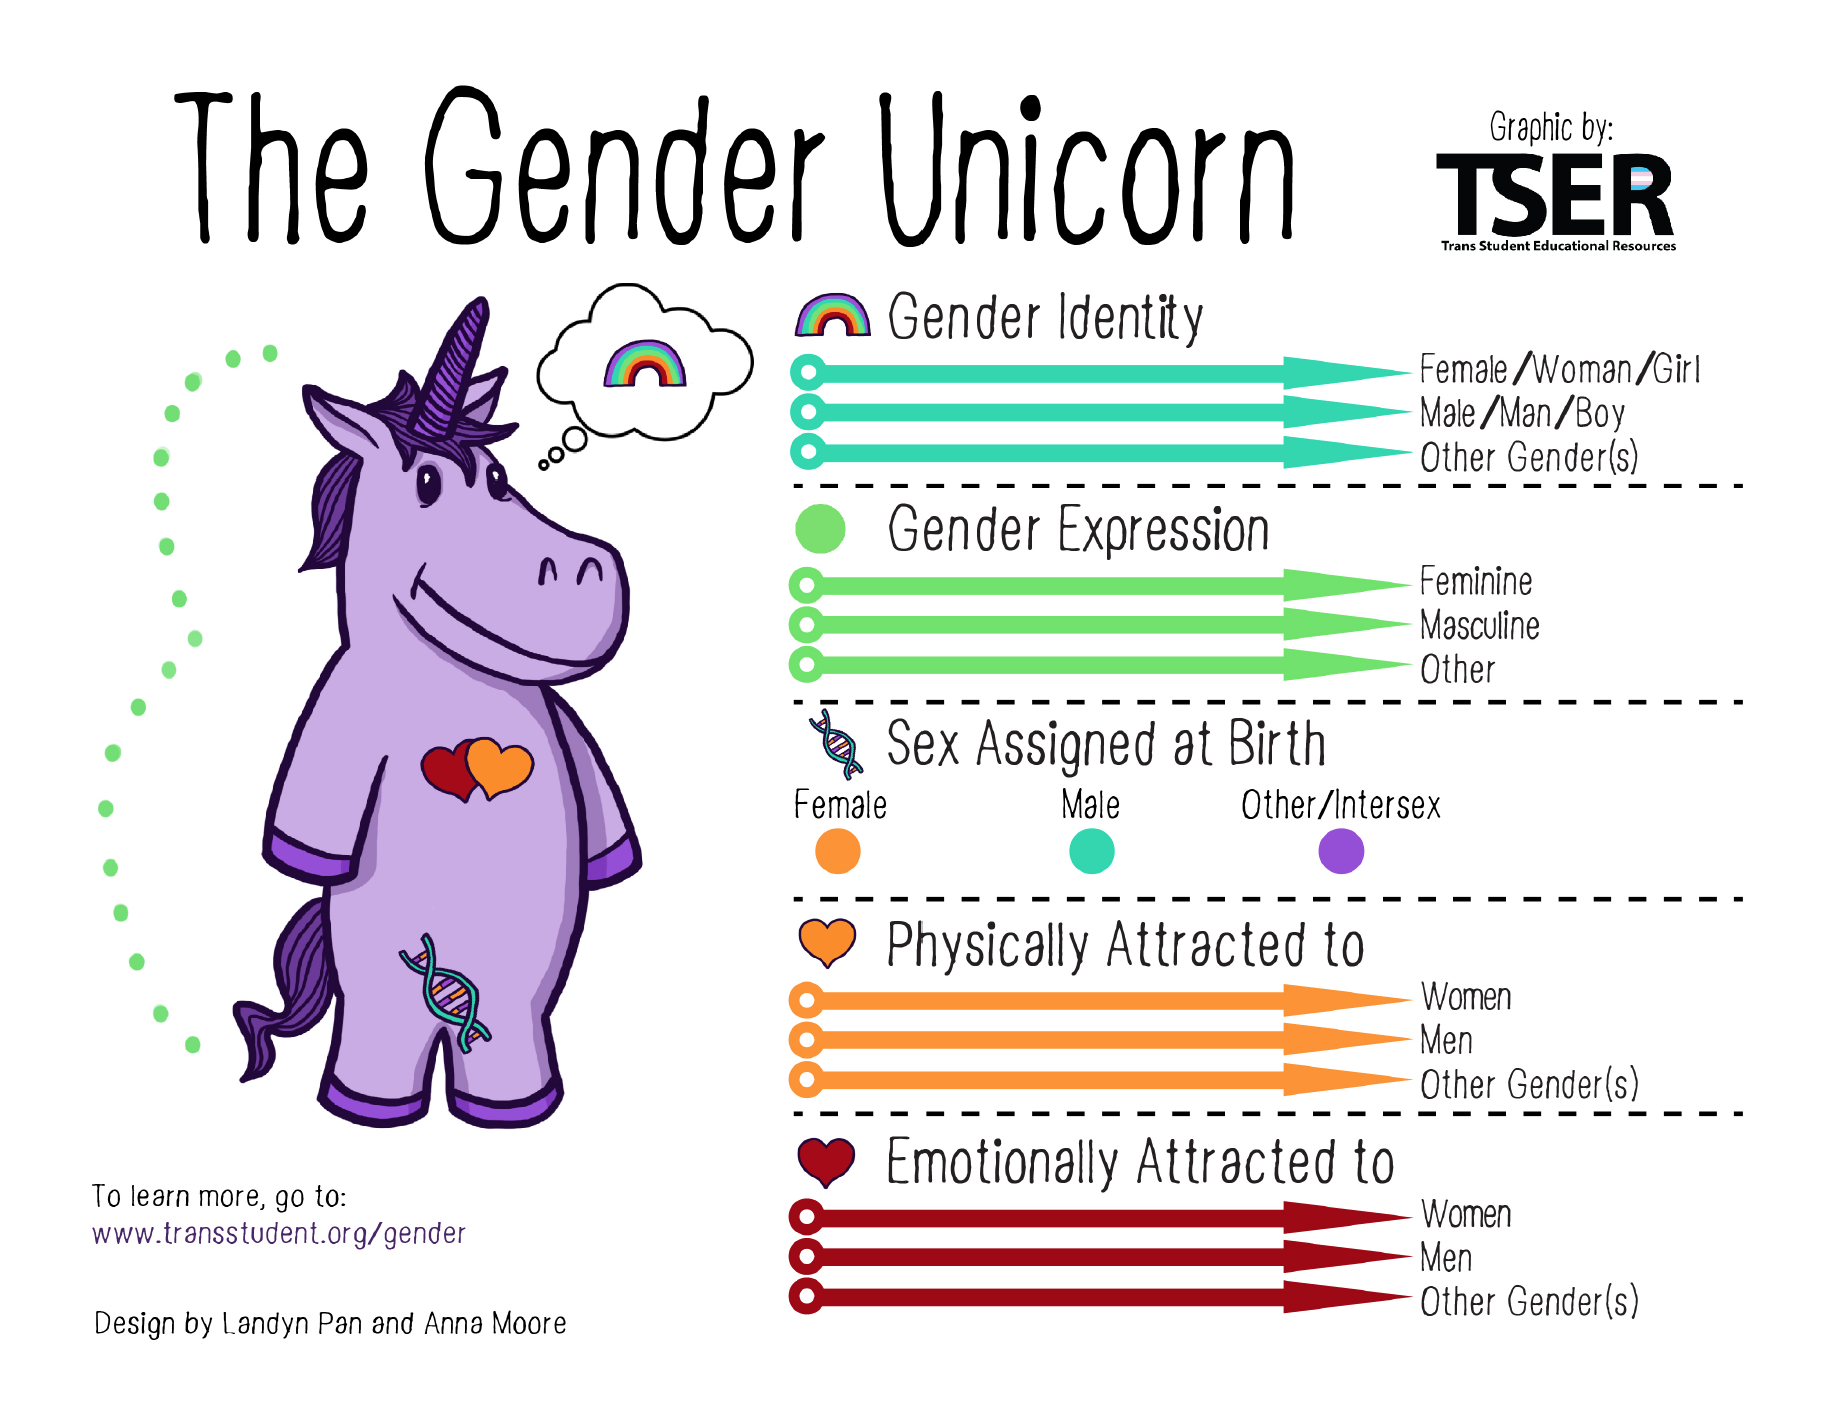 The gender Unicorn chart